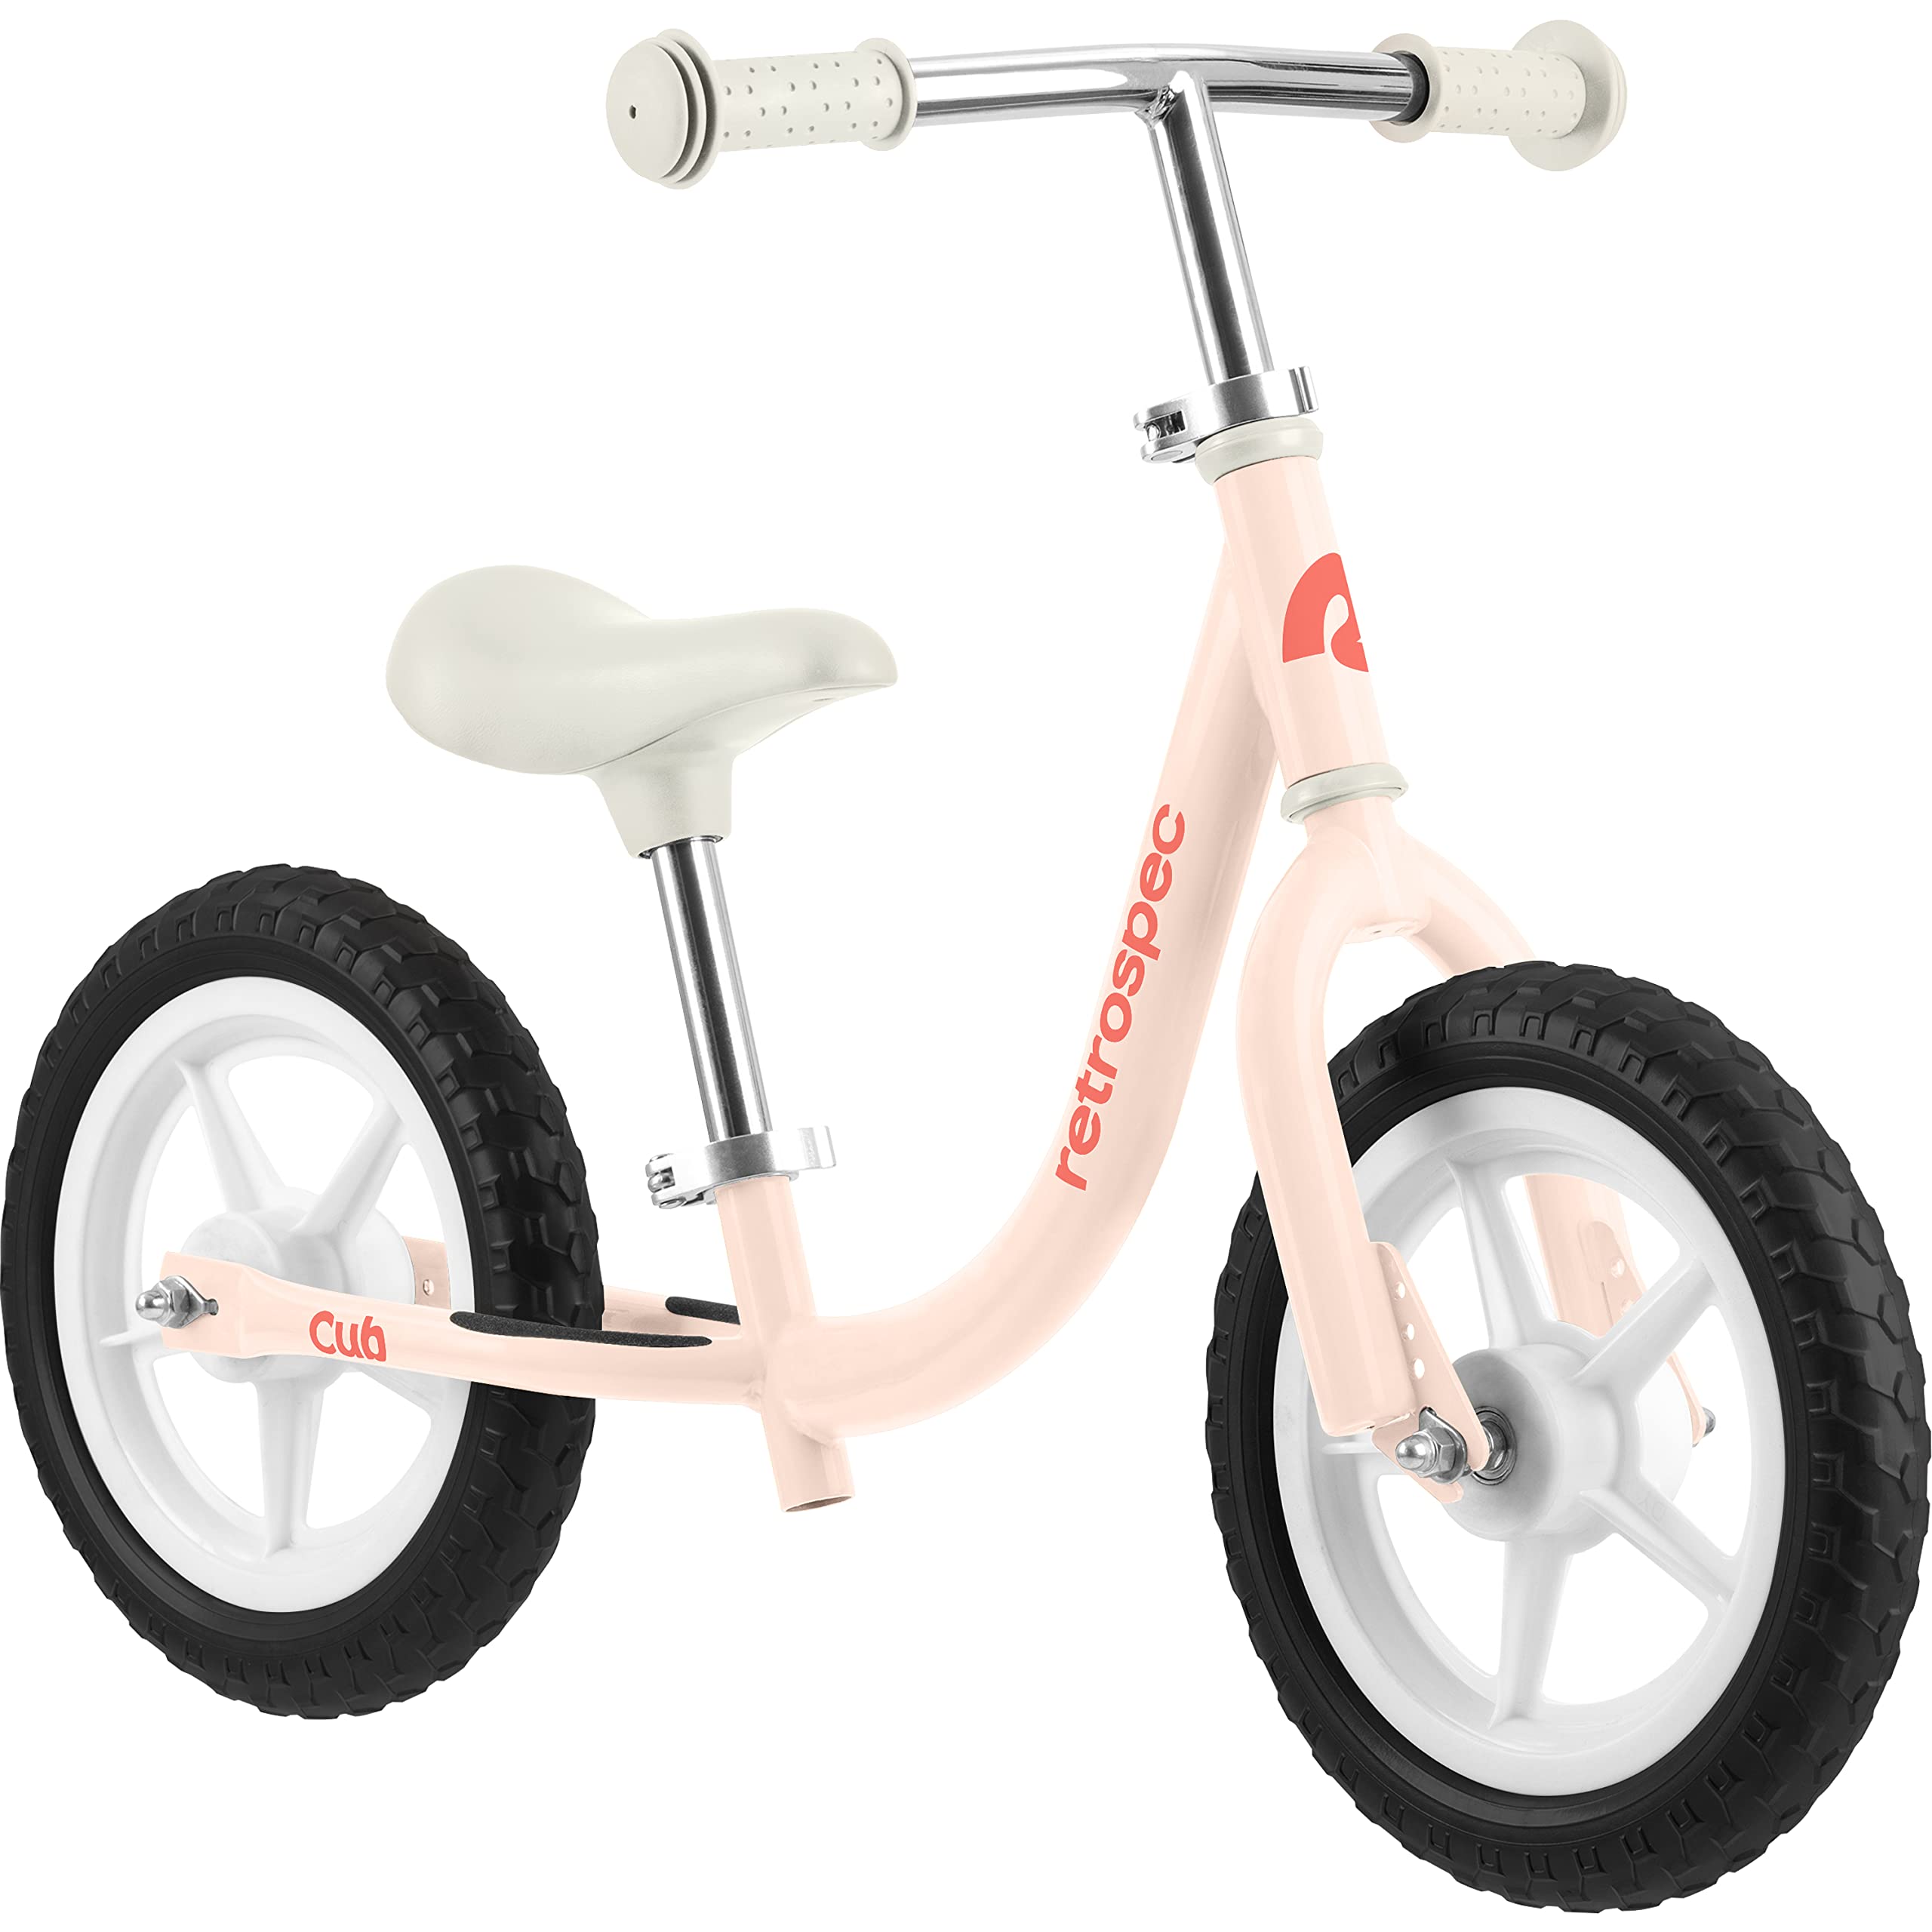  Retrospec Cub 幼児 12 フィート バランスバイク、18 か月 - 3 歳、女の子と男の子向けのペダルなし初心者子供用自転車、パンクしないタイヤ、調節可能...